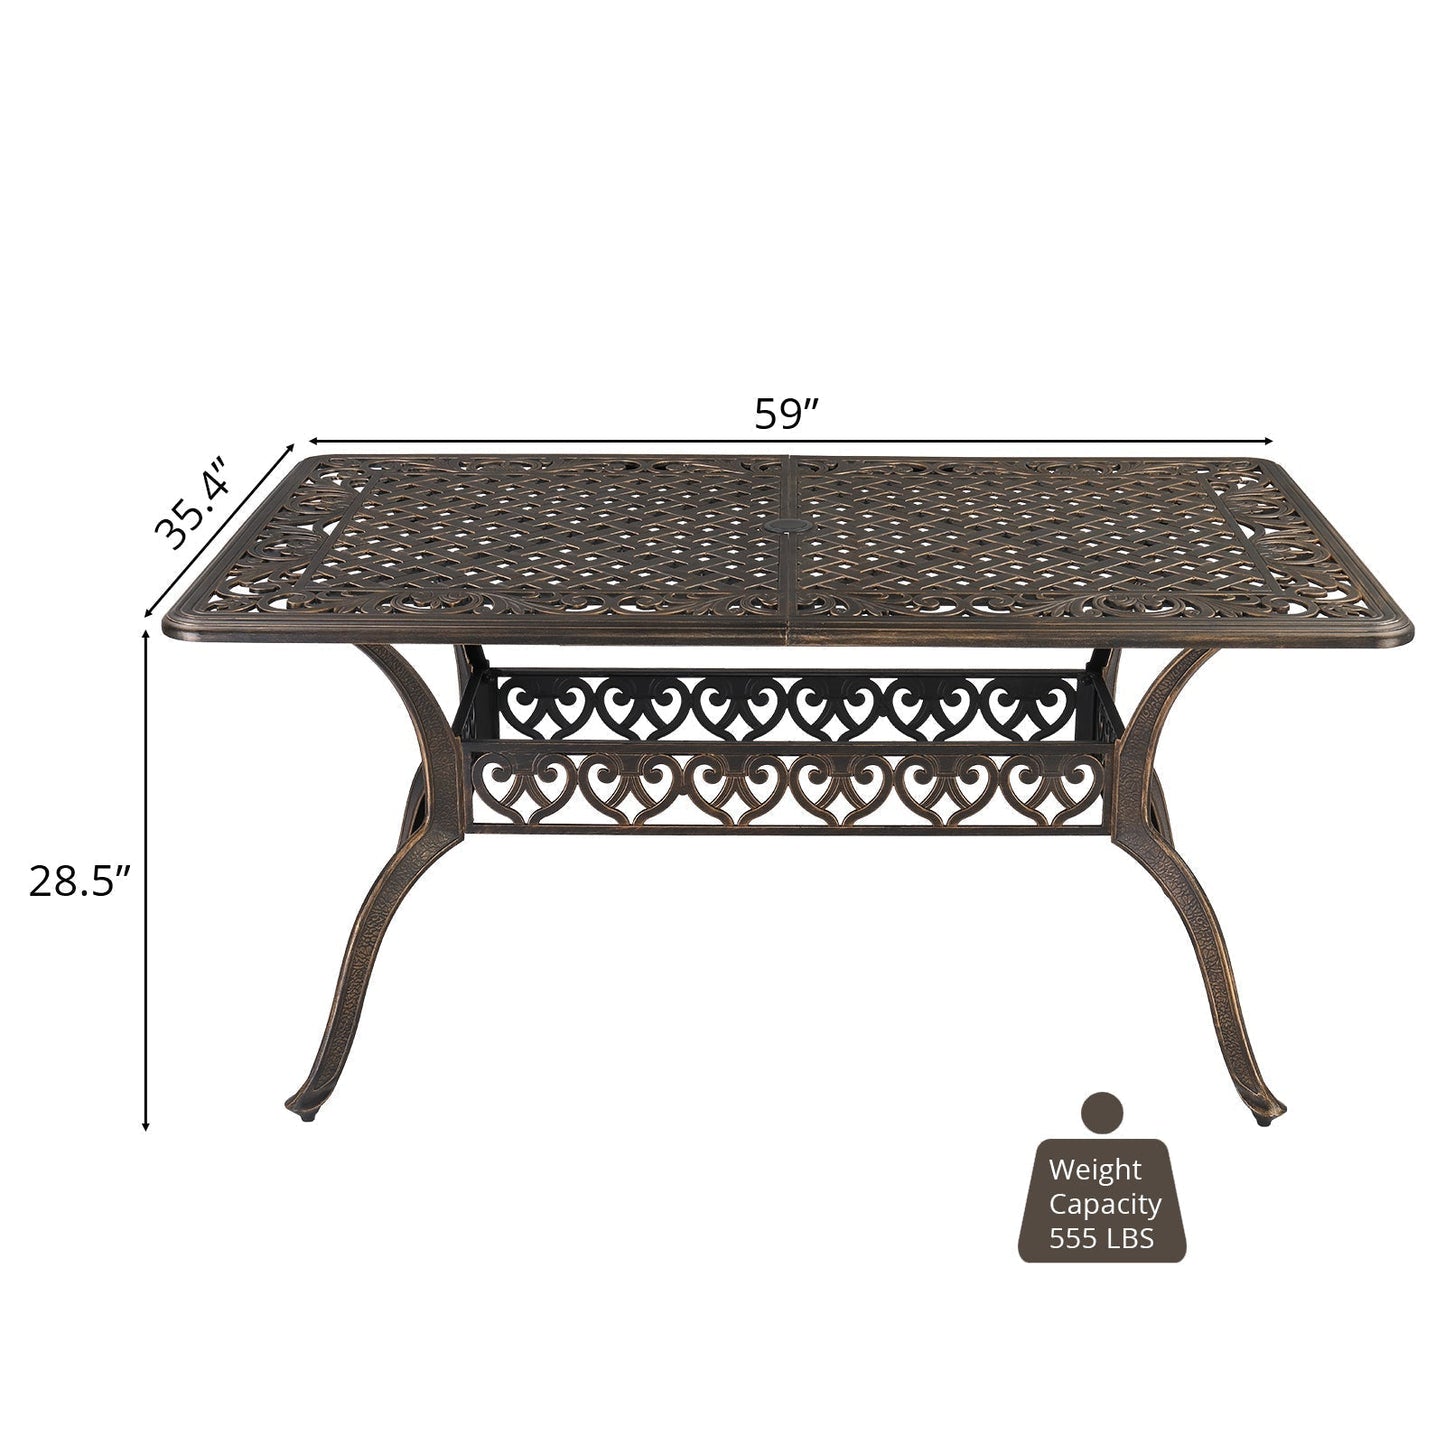 59in Desktop Mosaic Garden Cast Aluminum Table Bronze(WITHOUT CHAIRS)